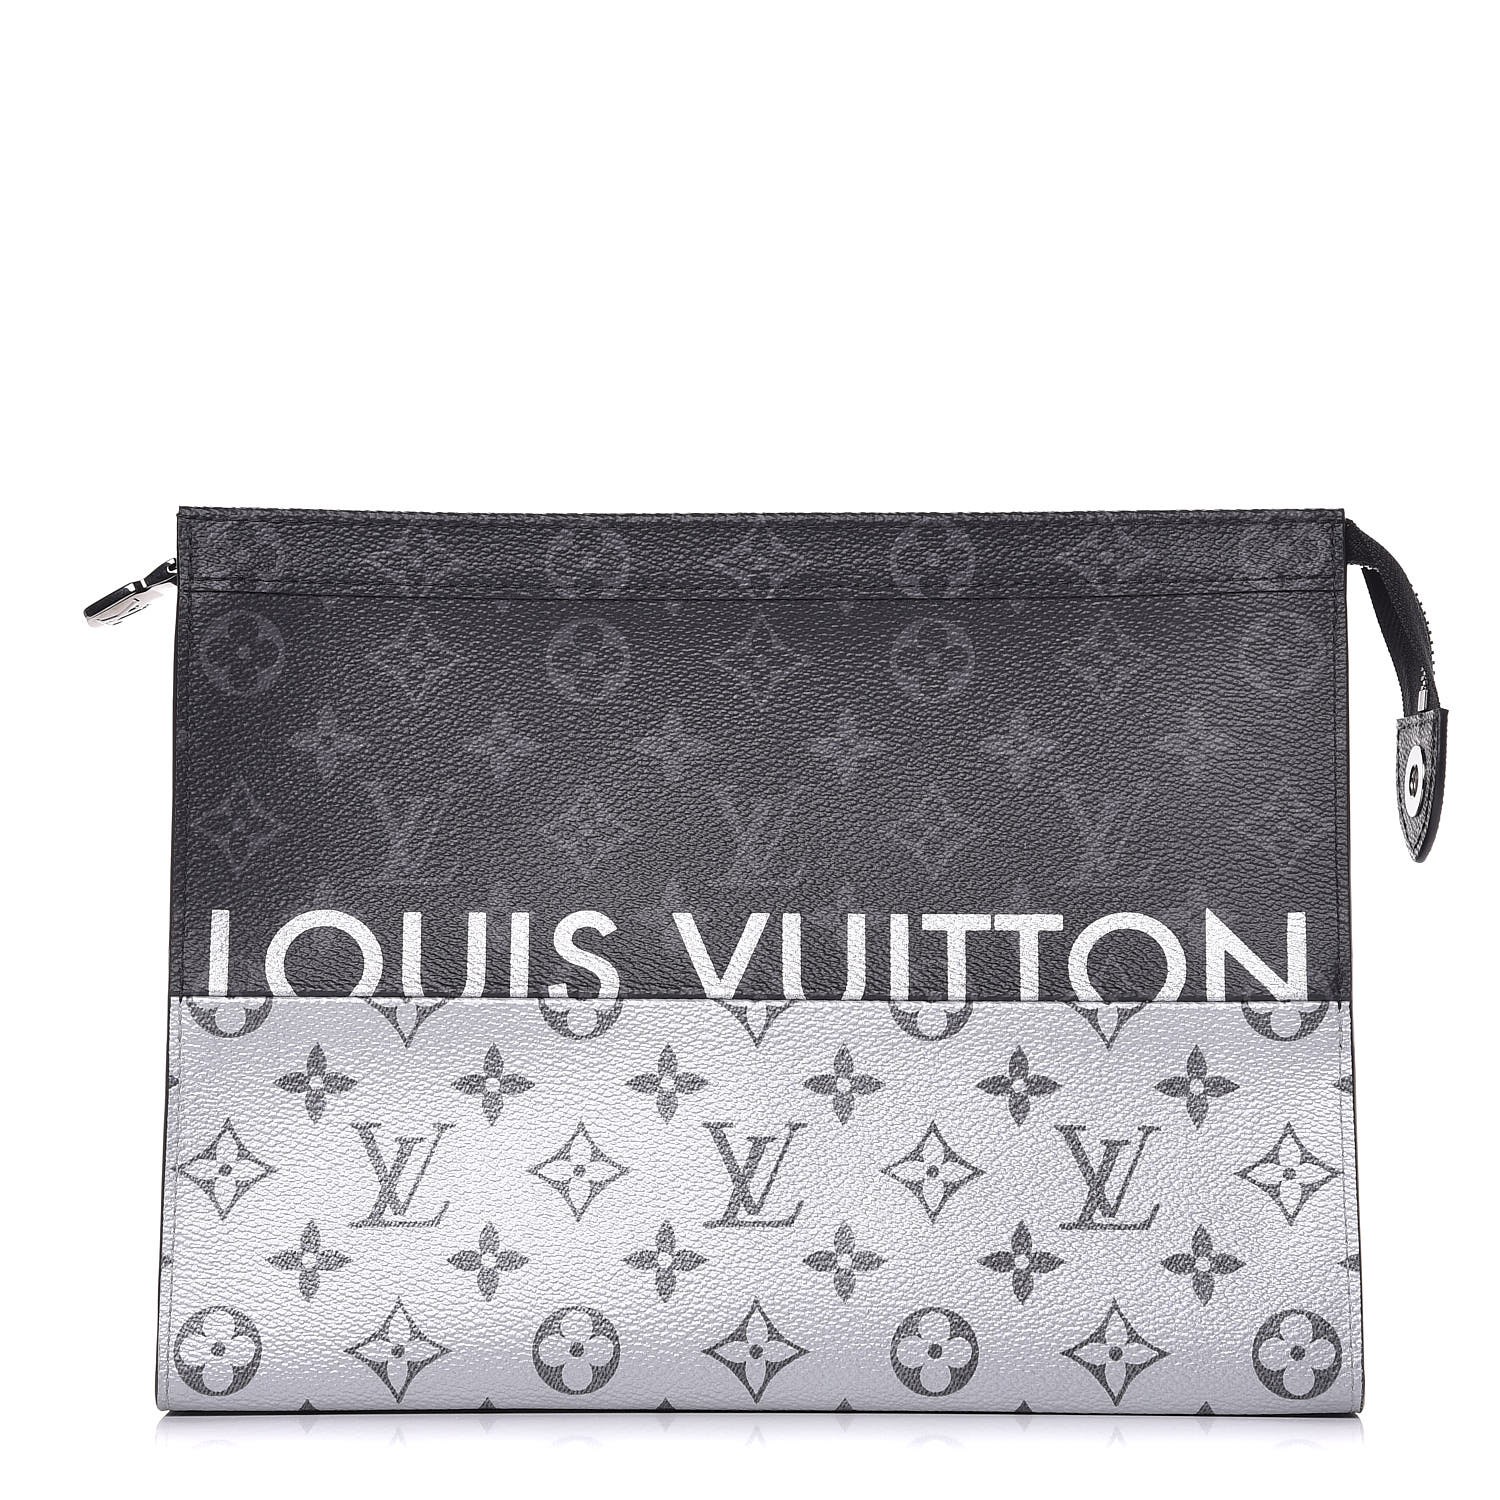 Shop Louis Vuitton Pochette Voyage Mm (N41696, M61692) by